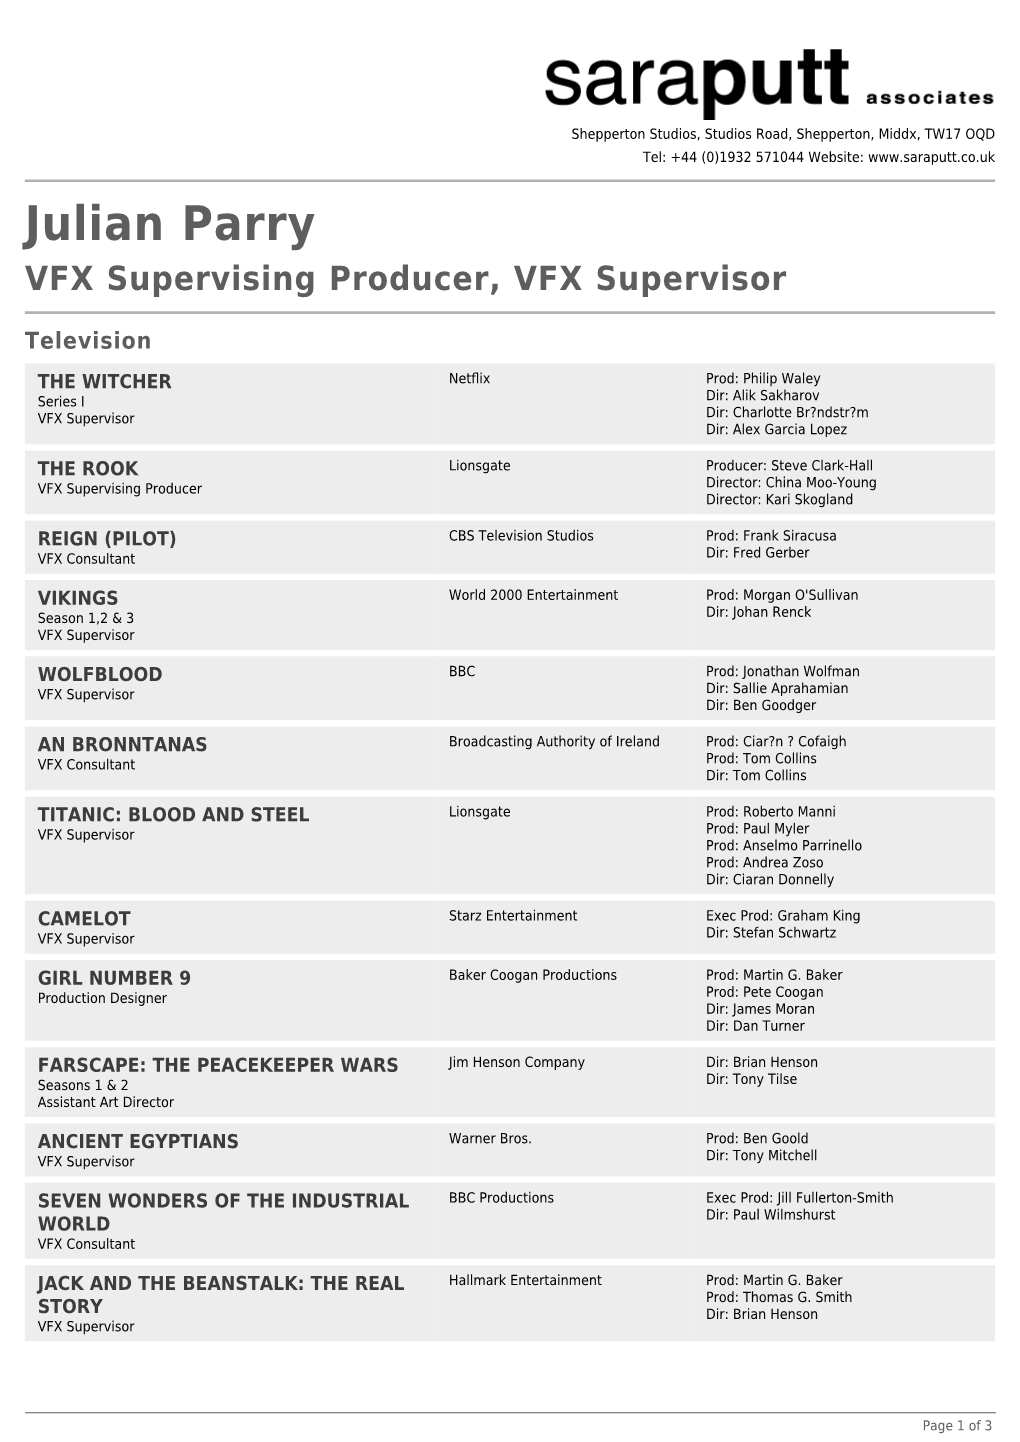 Julian Parry VFX Supervising Producer, VFX Supervisor